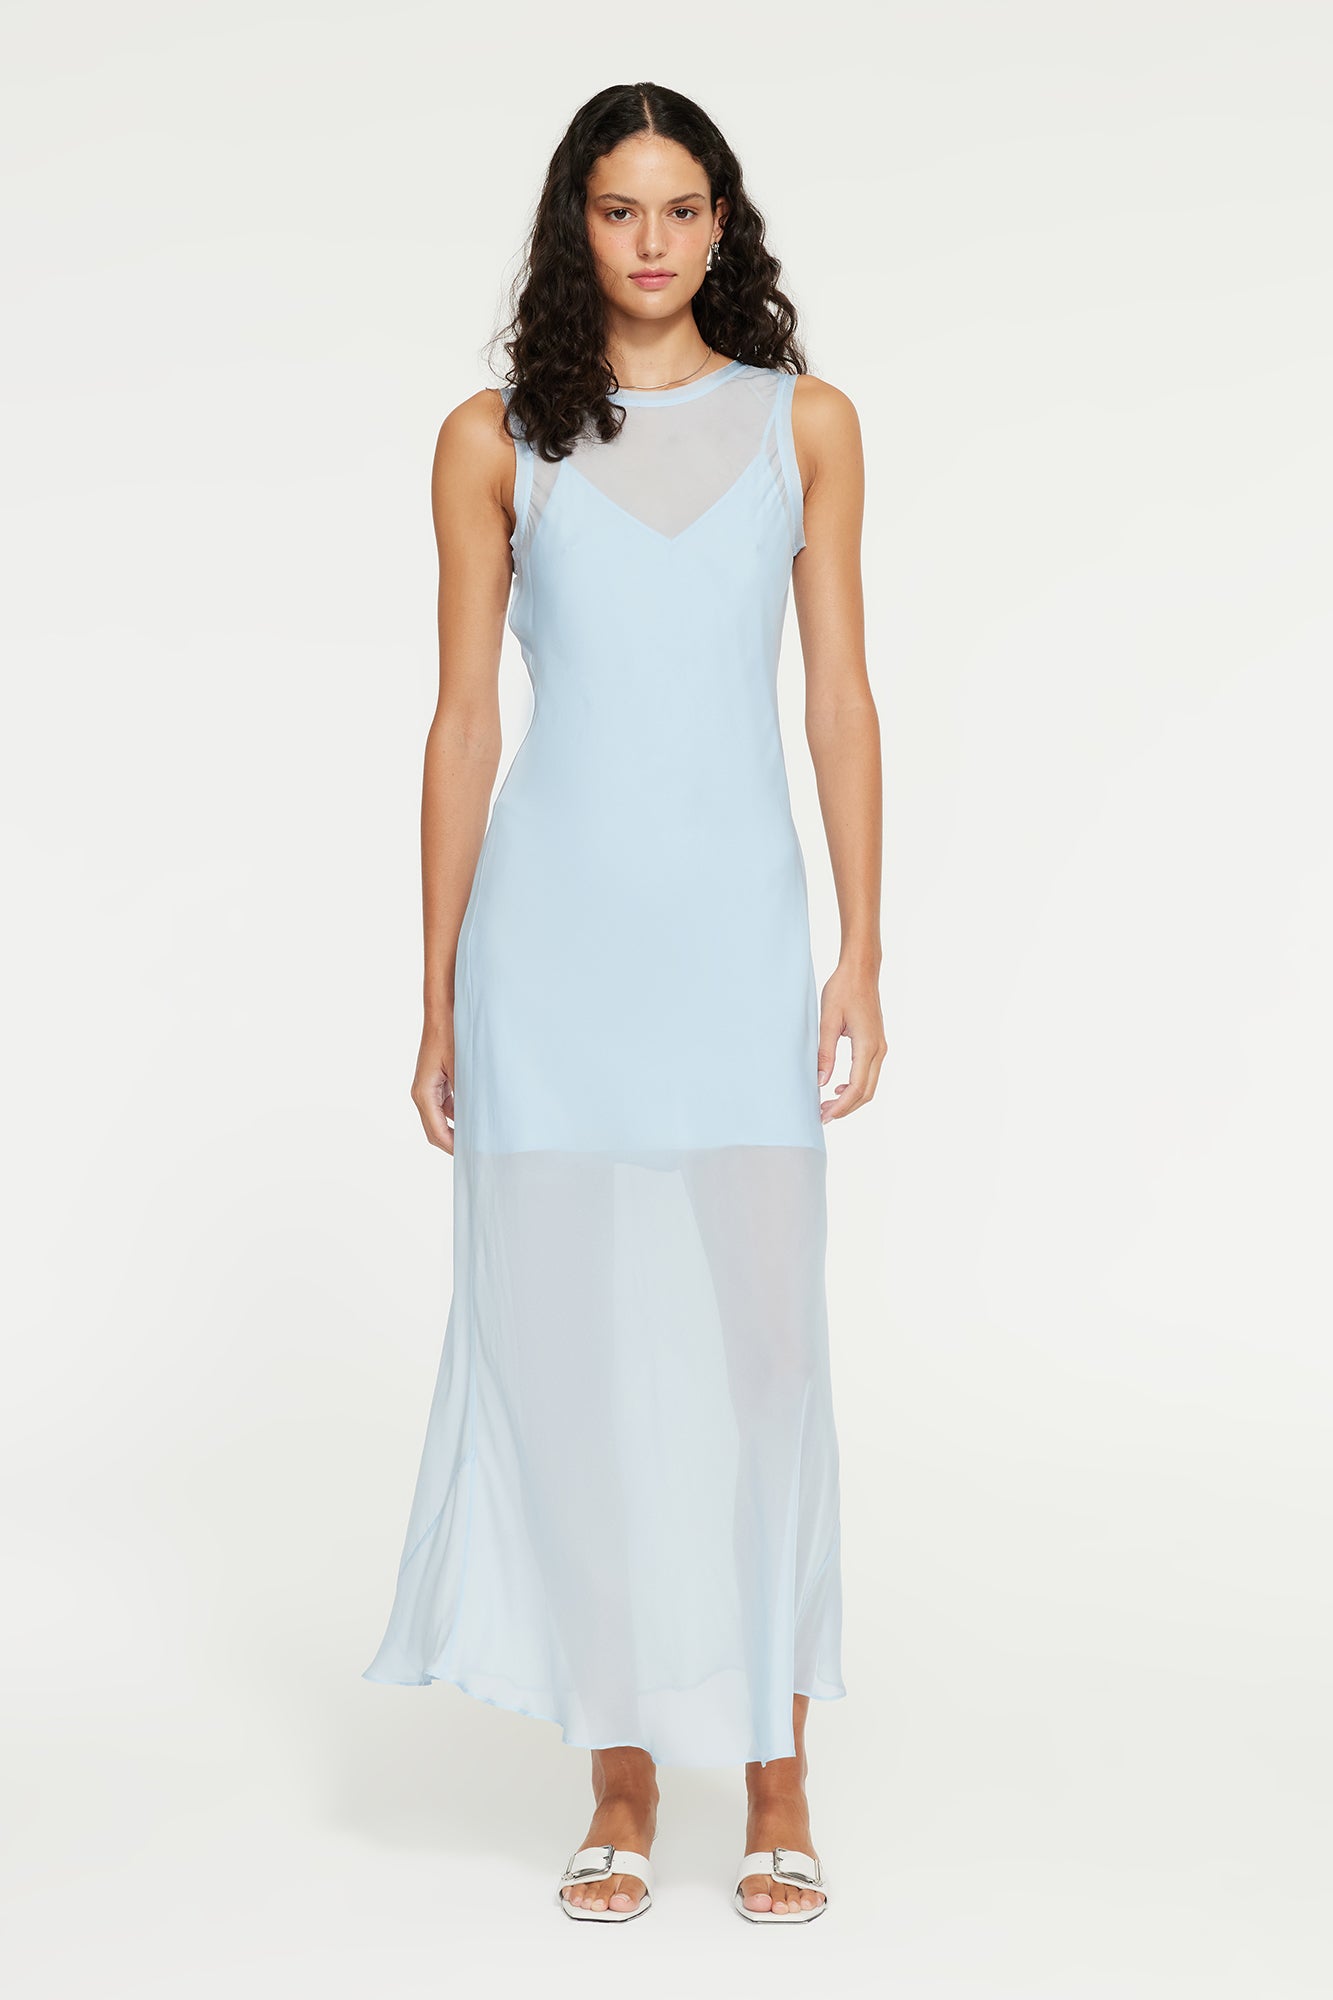 The Marli Dress By GINIA In Cornflower Blue